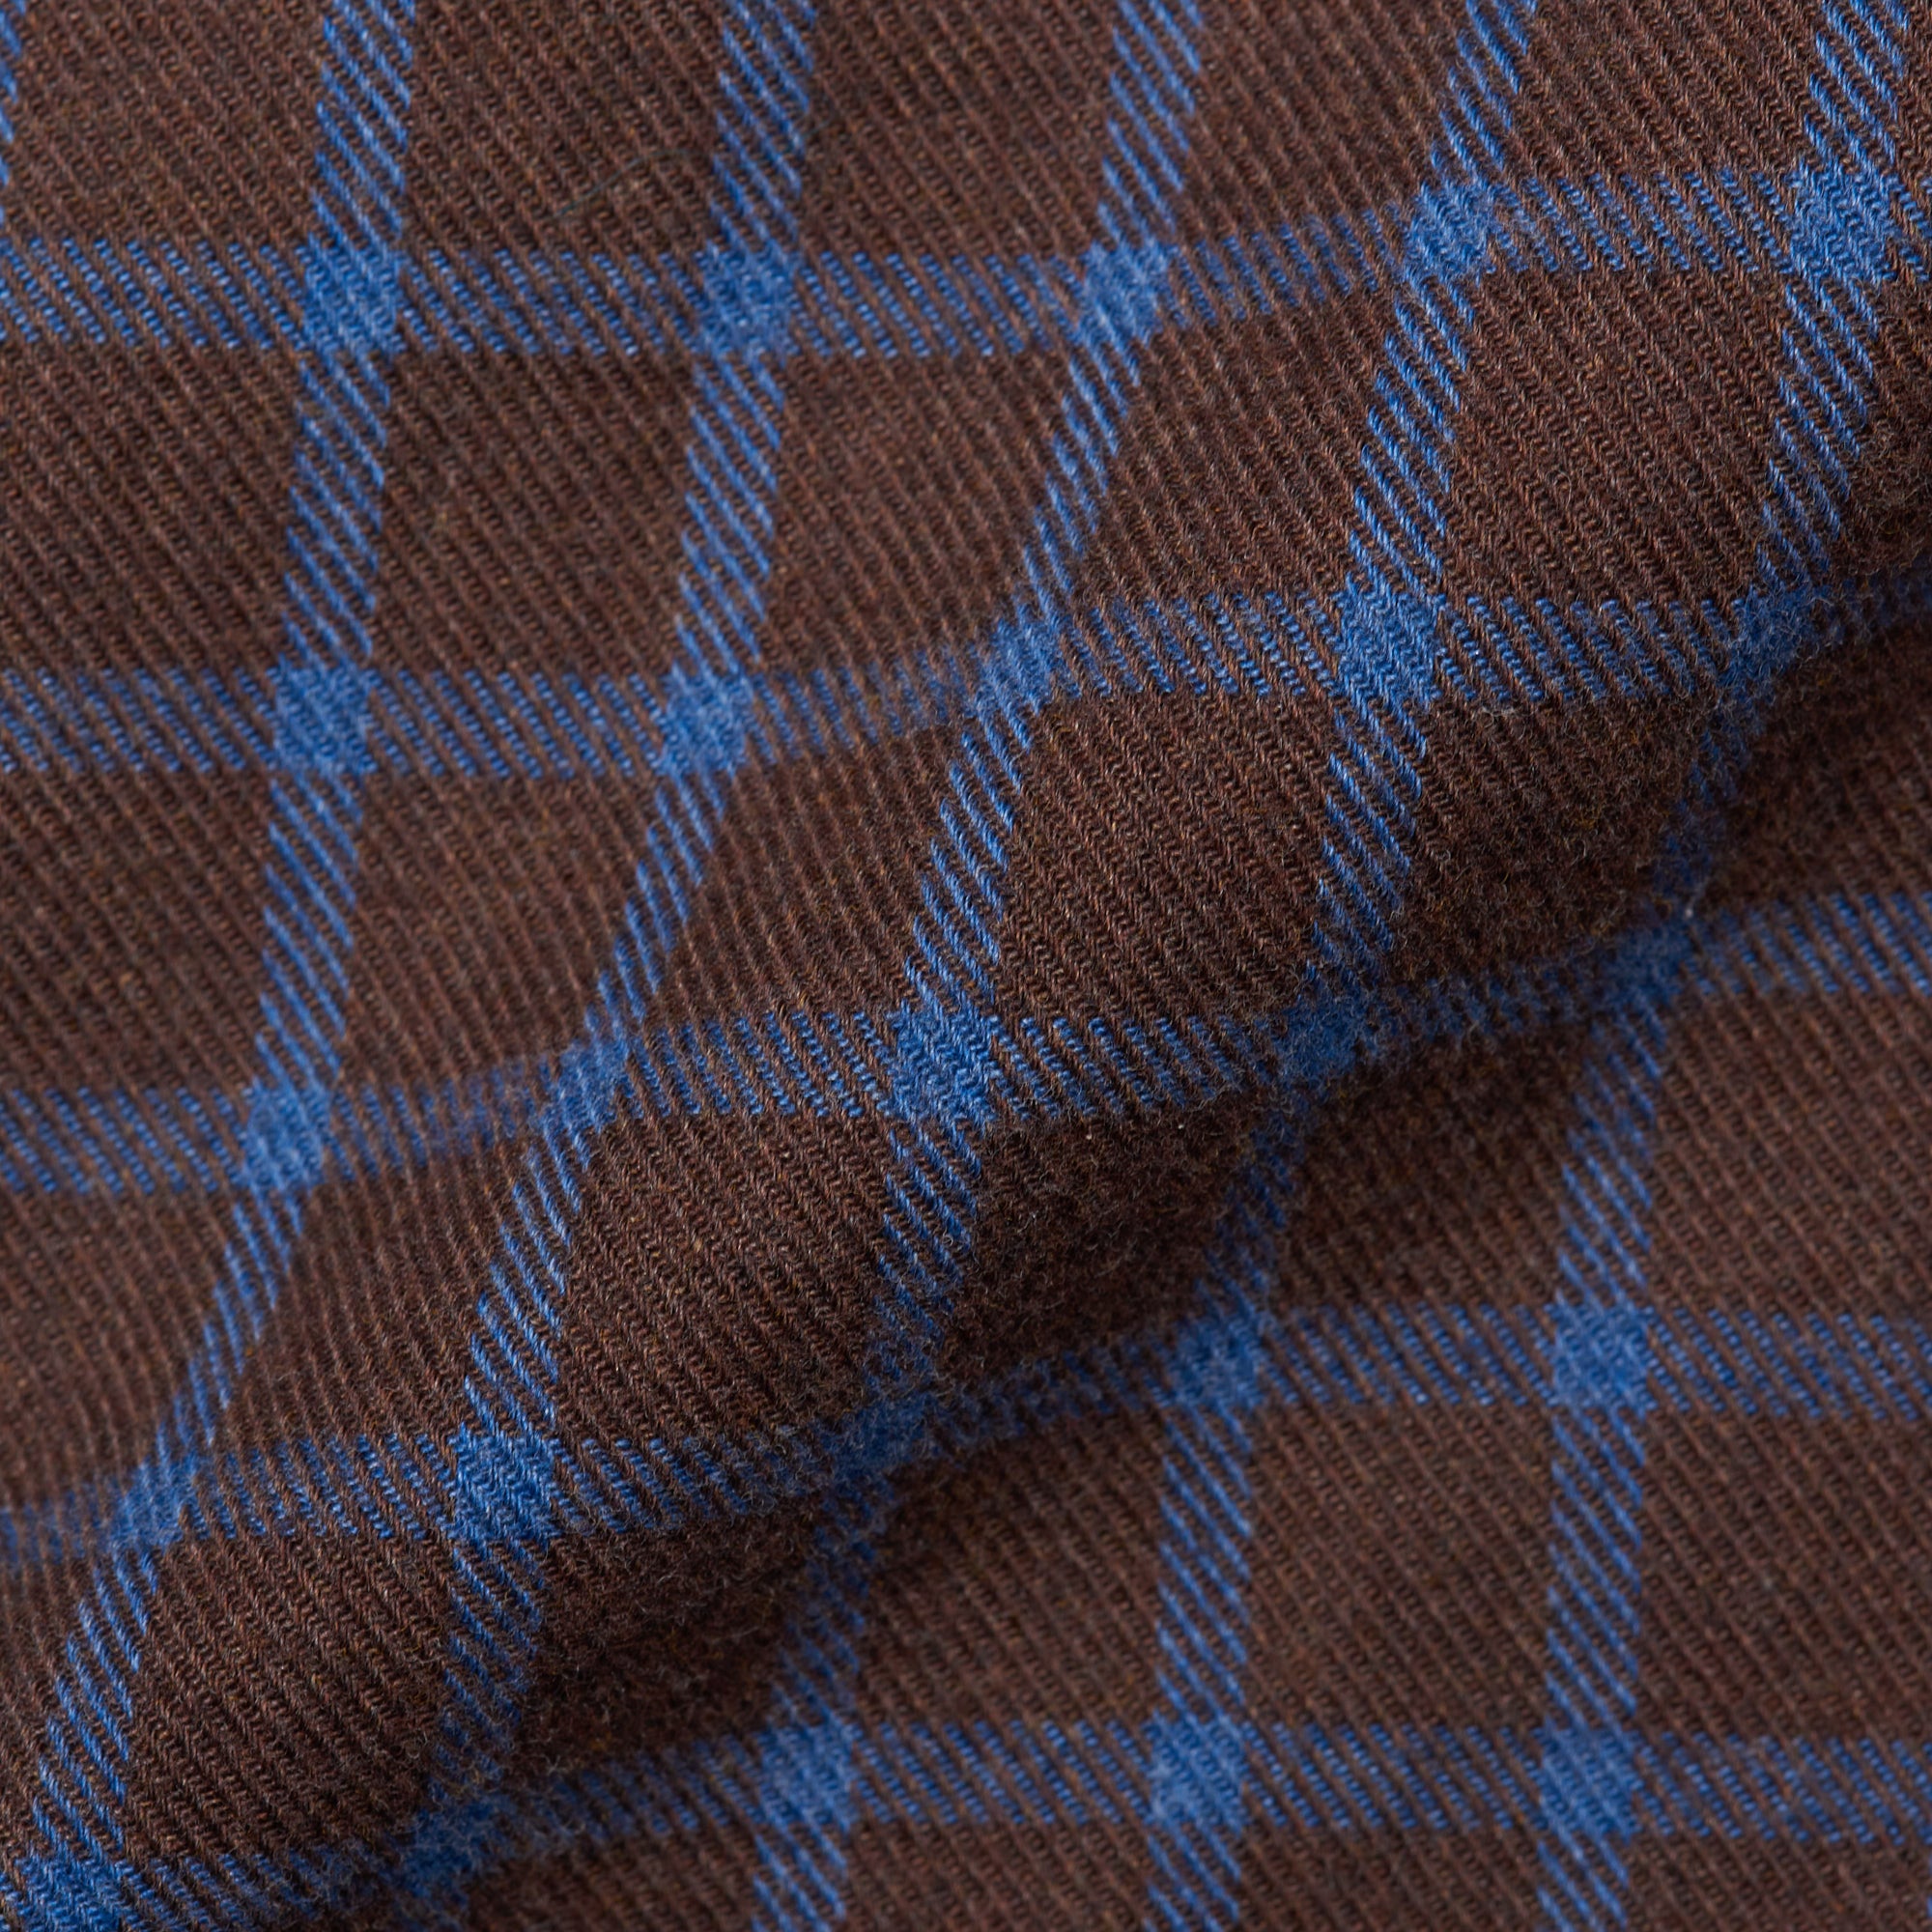 BILLY REID Brown-Blue Checked Twill Cotton Casual Shirt NEW US L Standard Cut BILLY REID